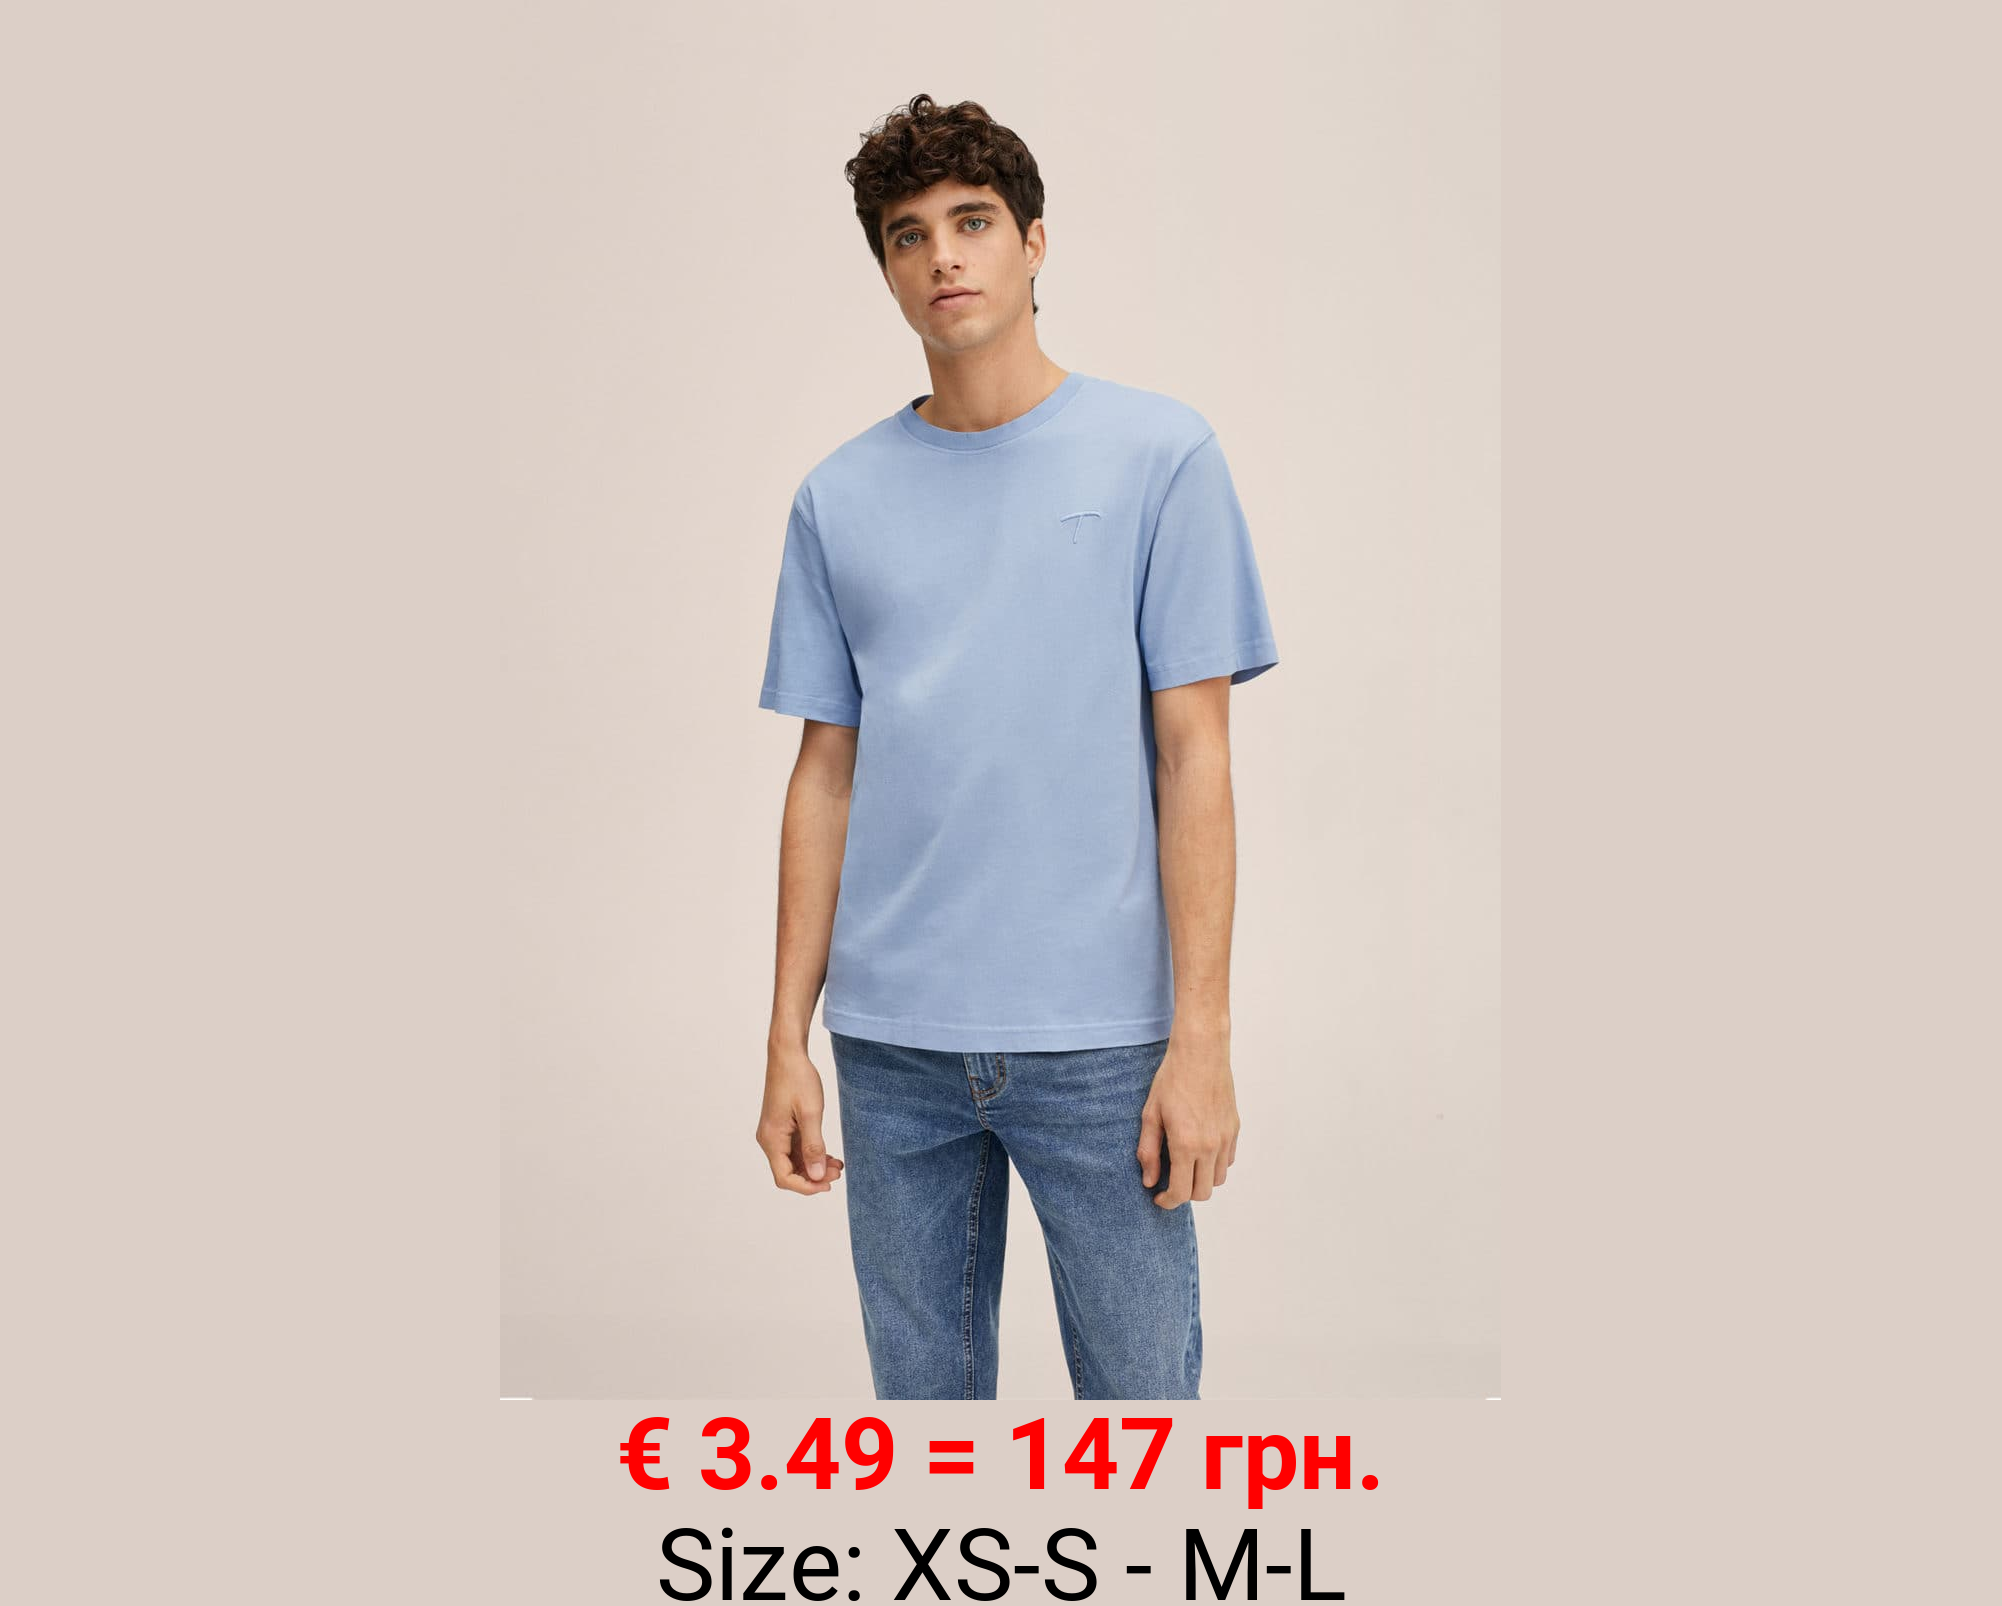 Camiseta unisex colección t